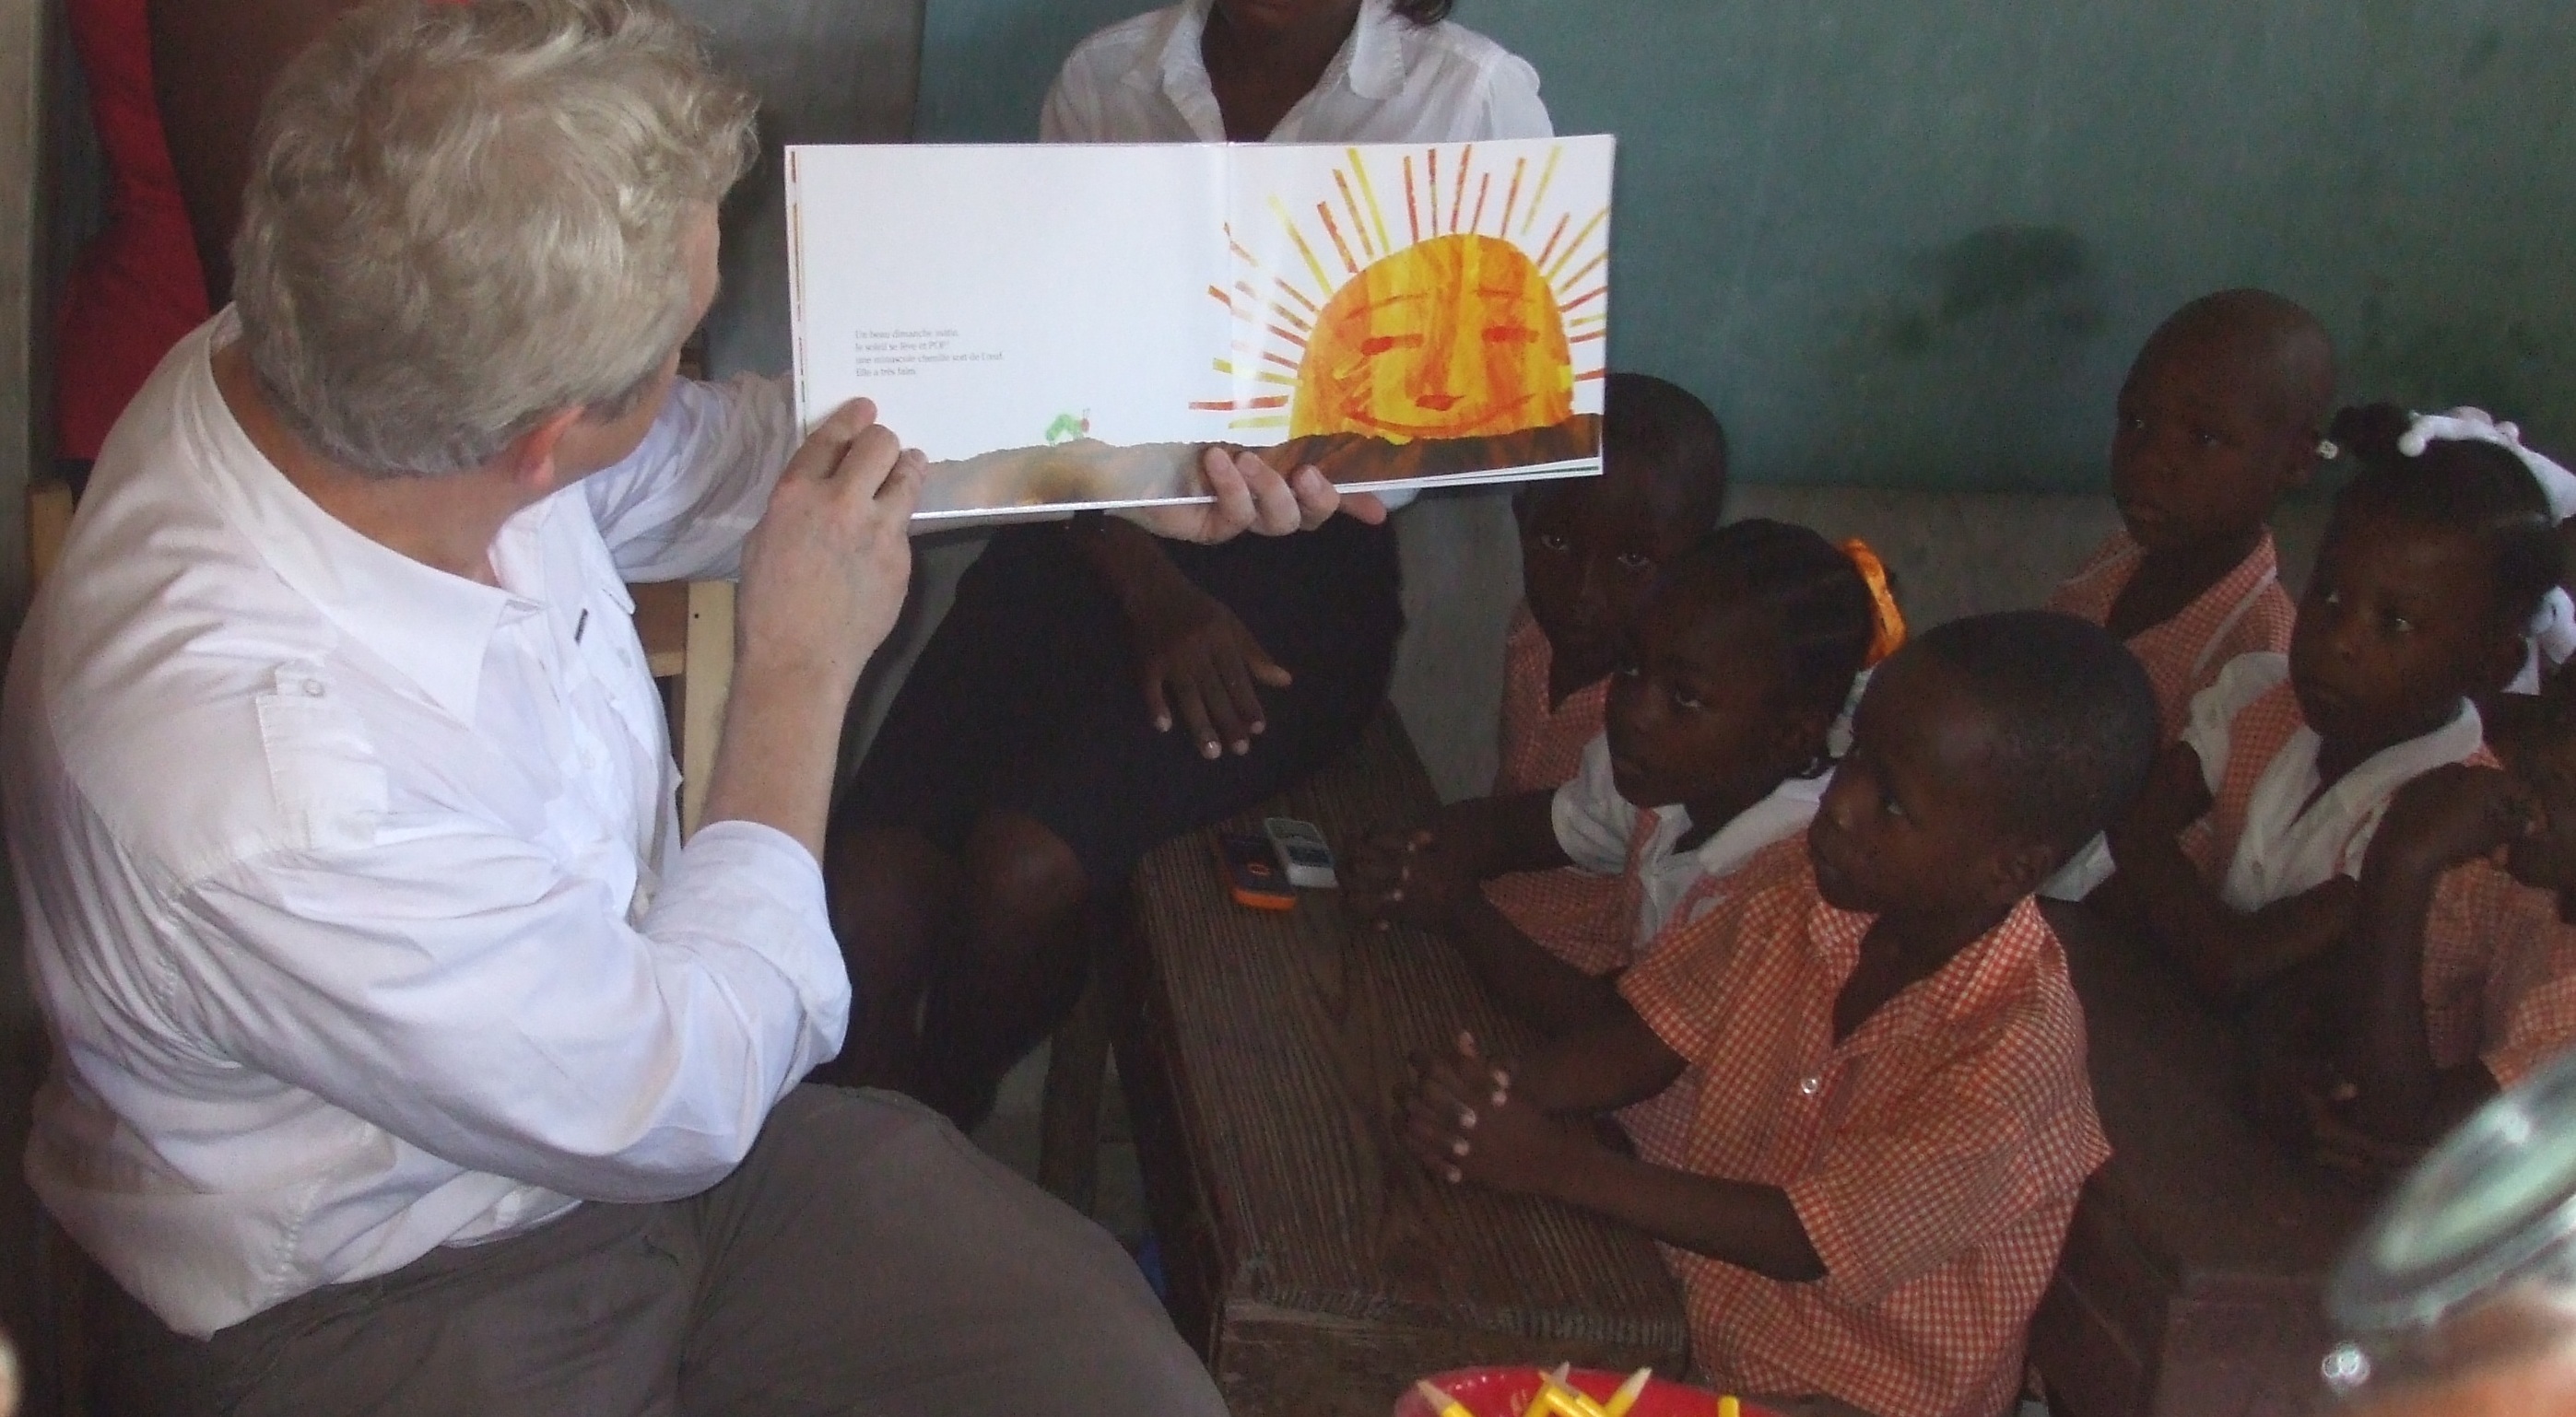 Kindergarteners listen attentively as a visitor reads “La Chenille Qui Fait Des Trous” at the elementary school in Petit-Goâve.